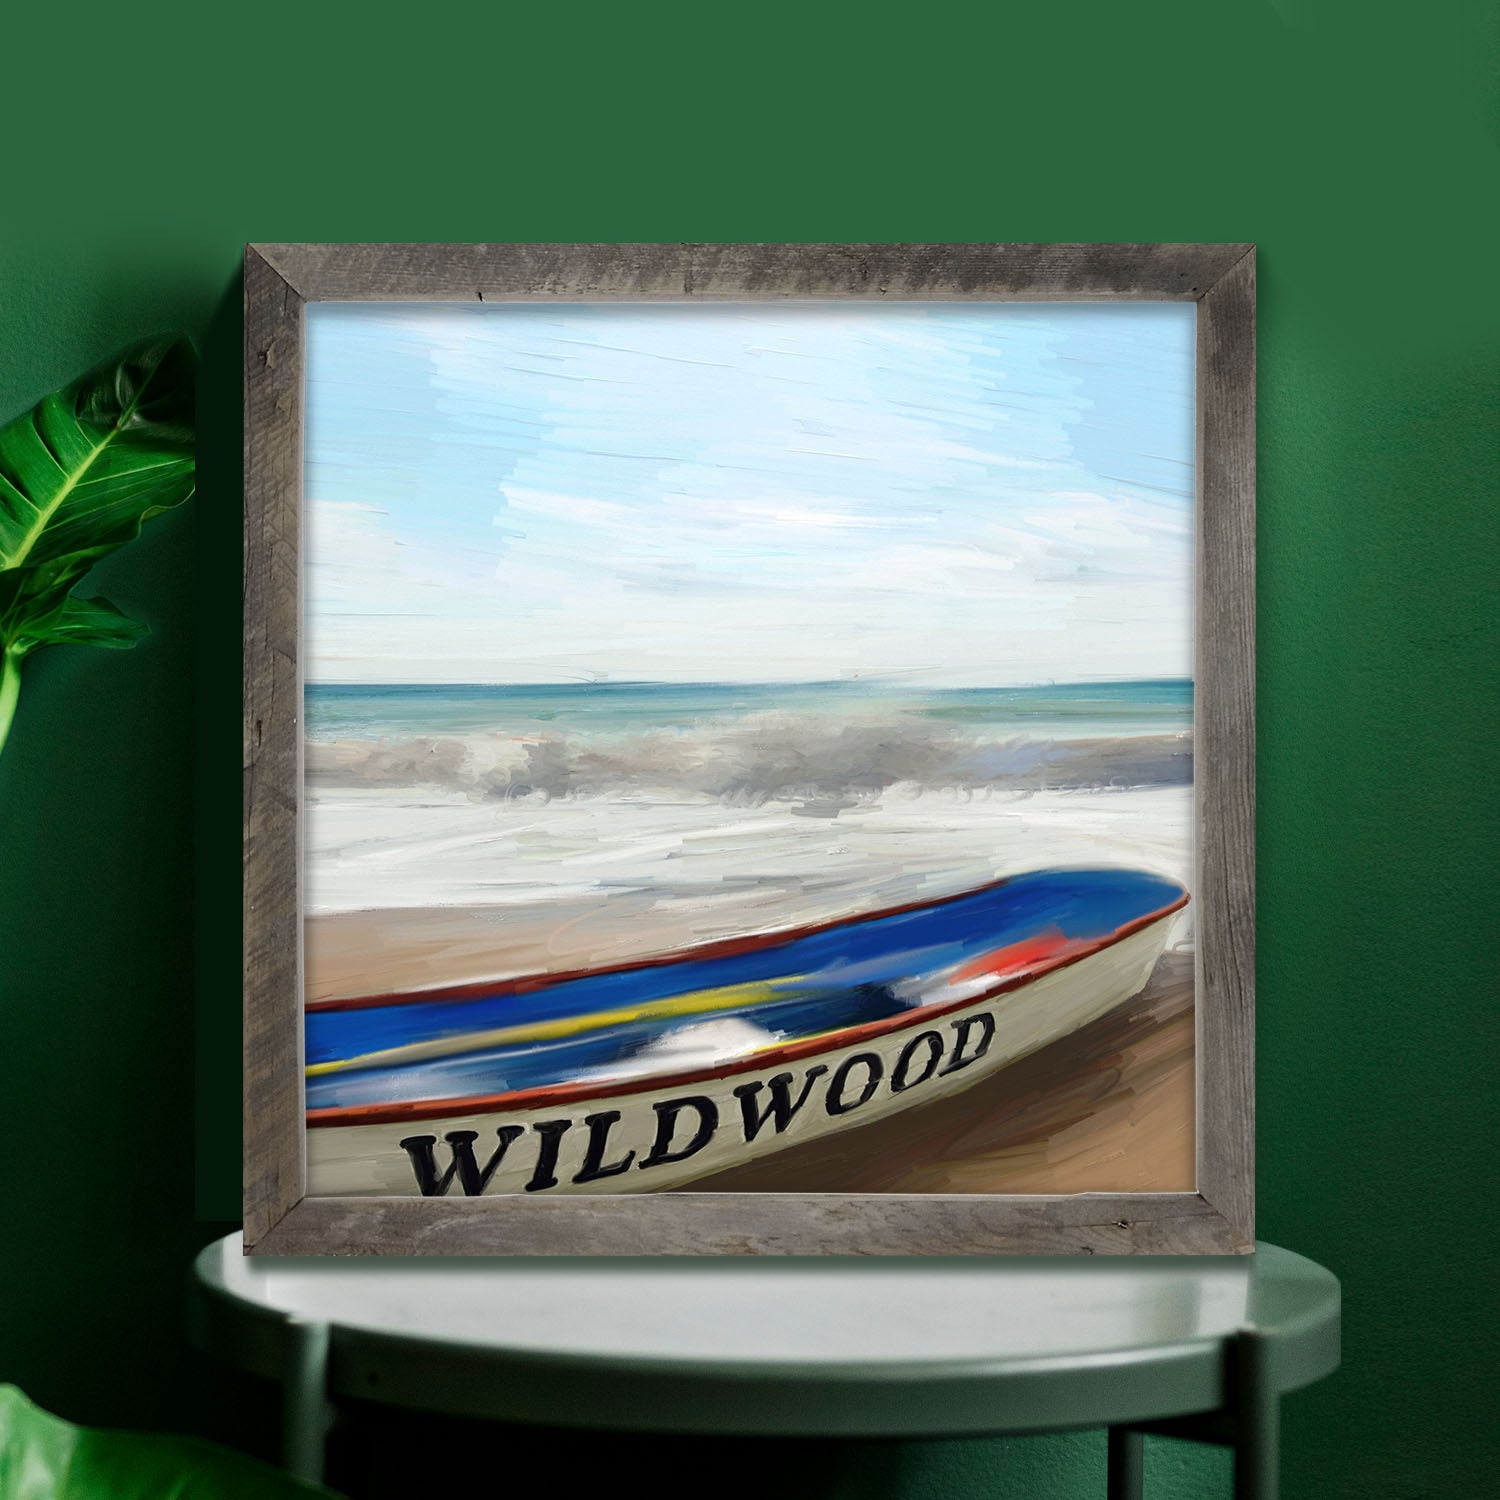 Wildwood Boat on Jersey Shore